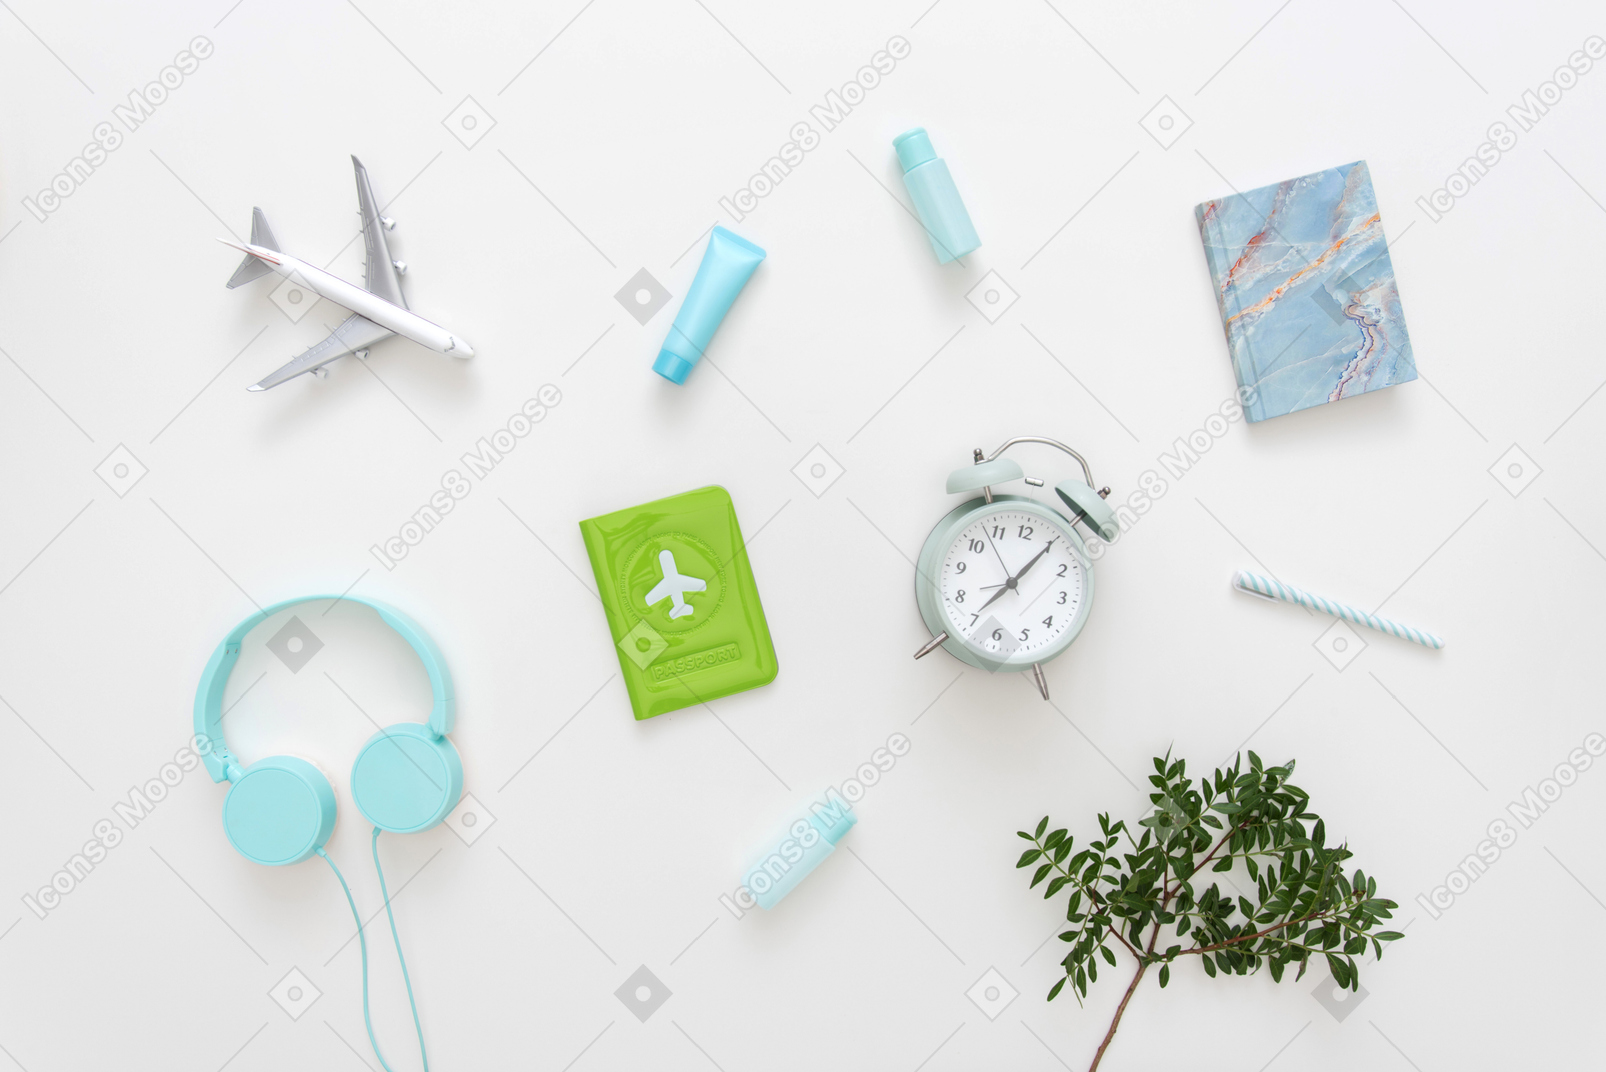 Blue heaphones, passport cover, alarm clock, airplane model and notebook